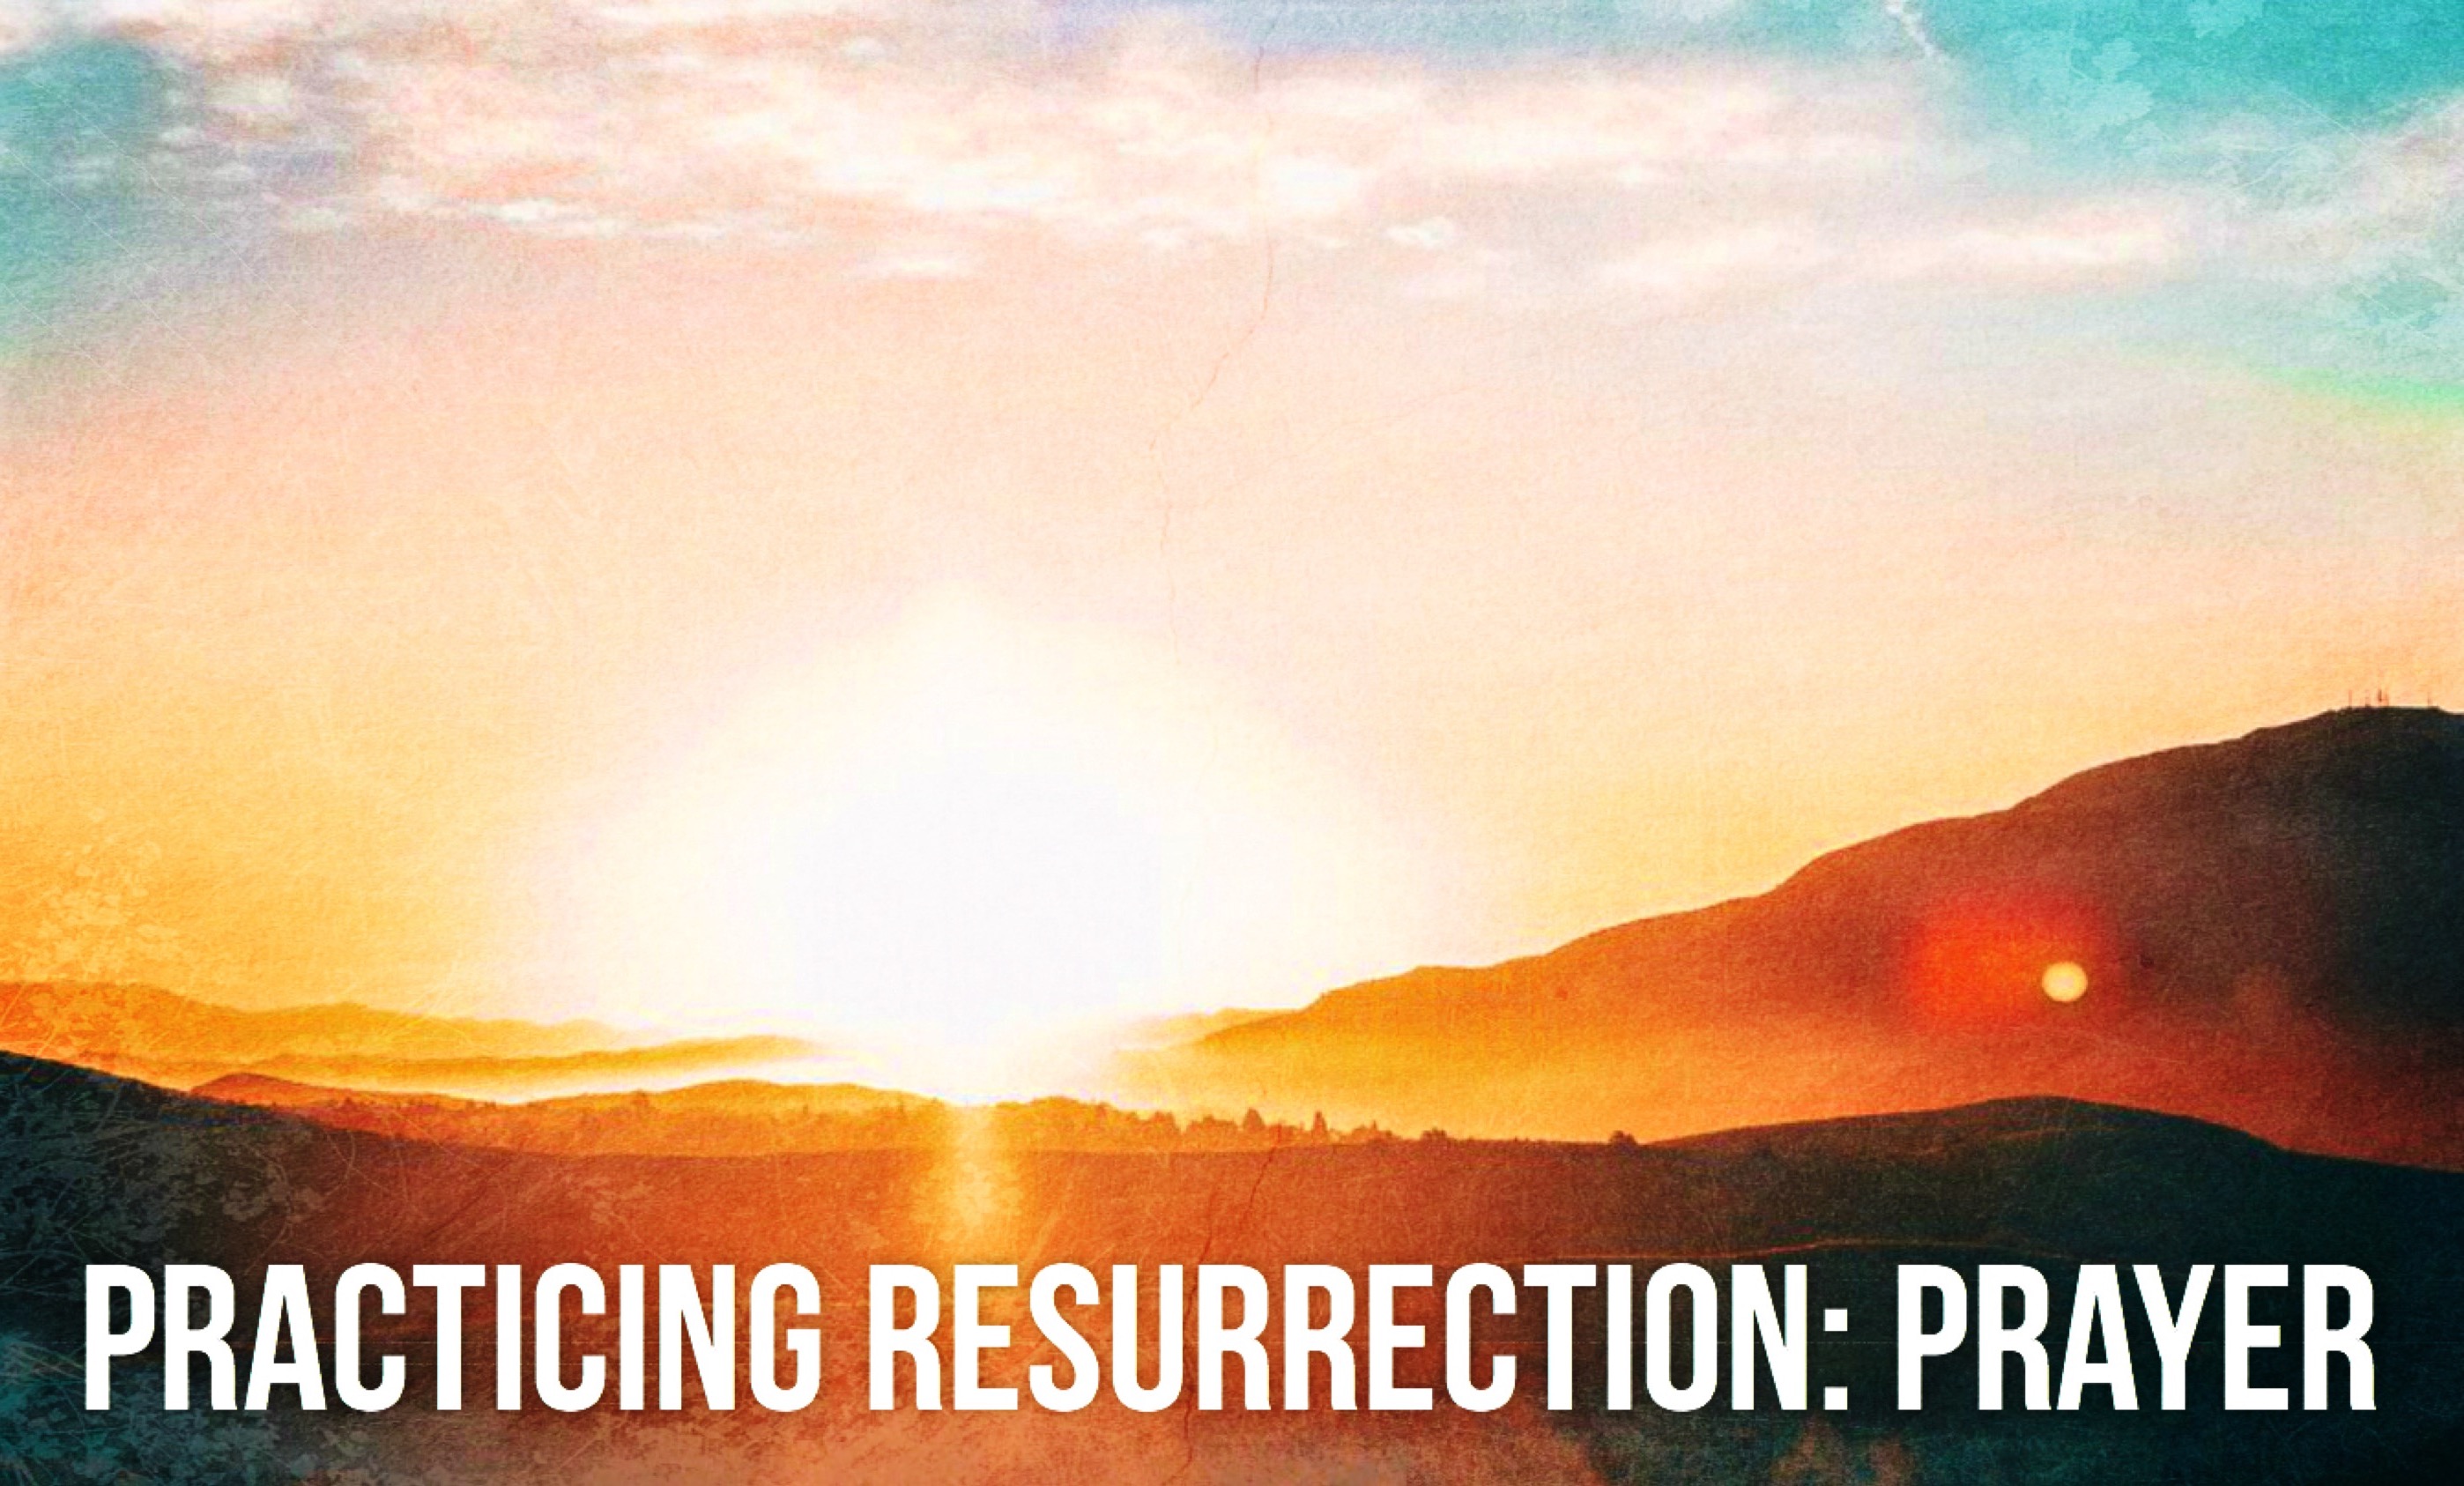 Ryan Post - "Practicing Resurrection: Prayer"